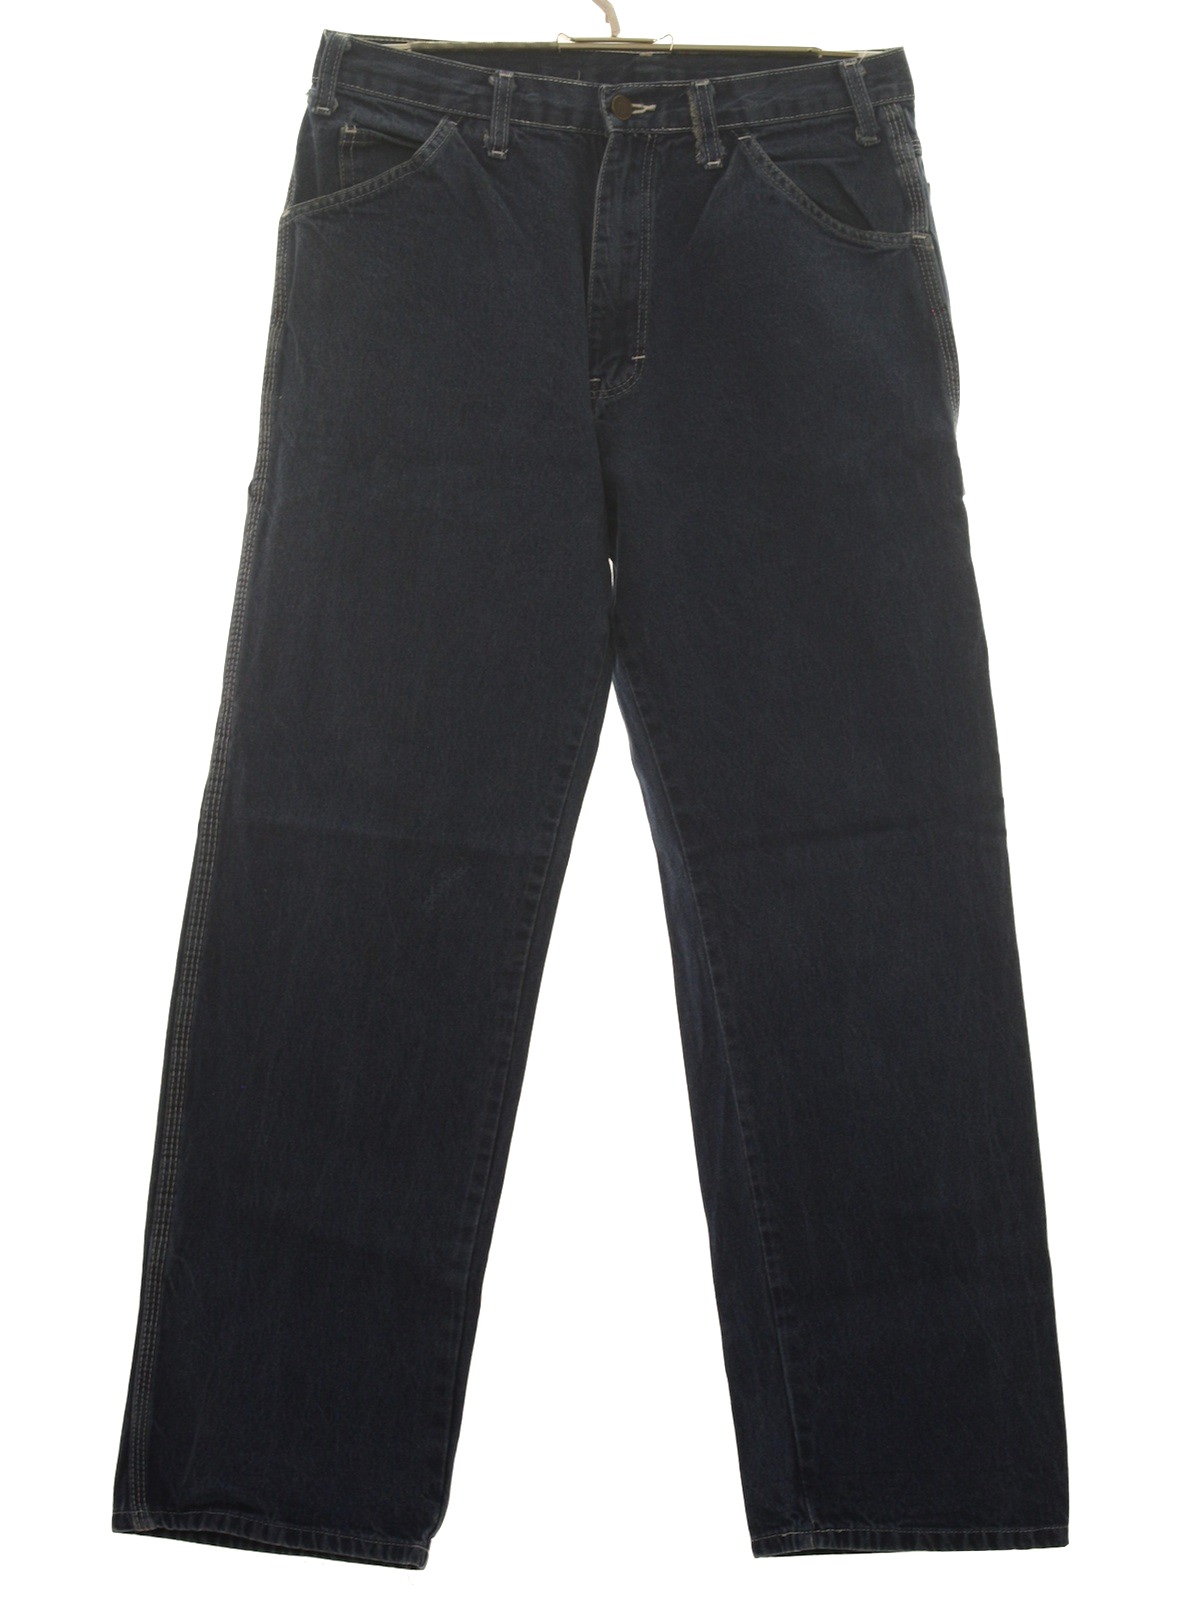 Retro 90s Pants (Dickies) : 90s -Dickies- Mens cotton dark blue denim ...